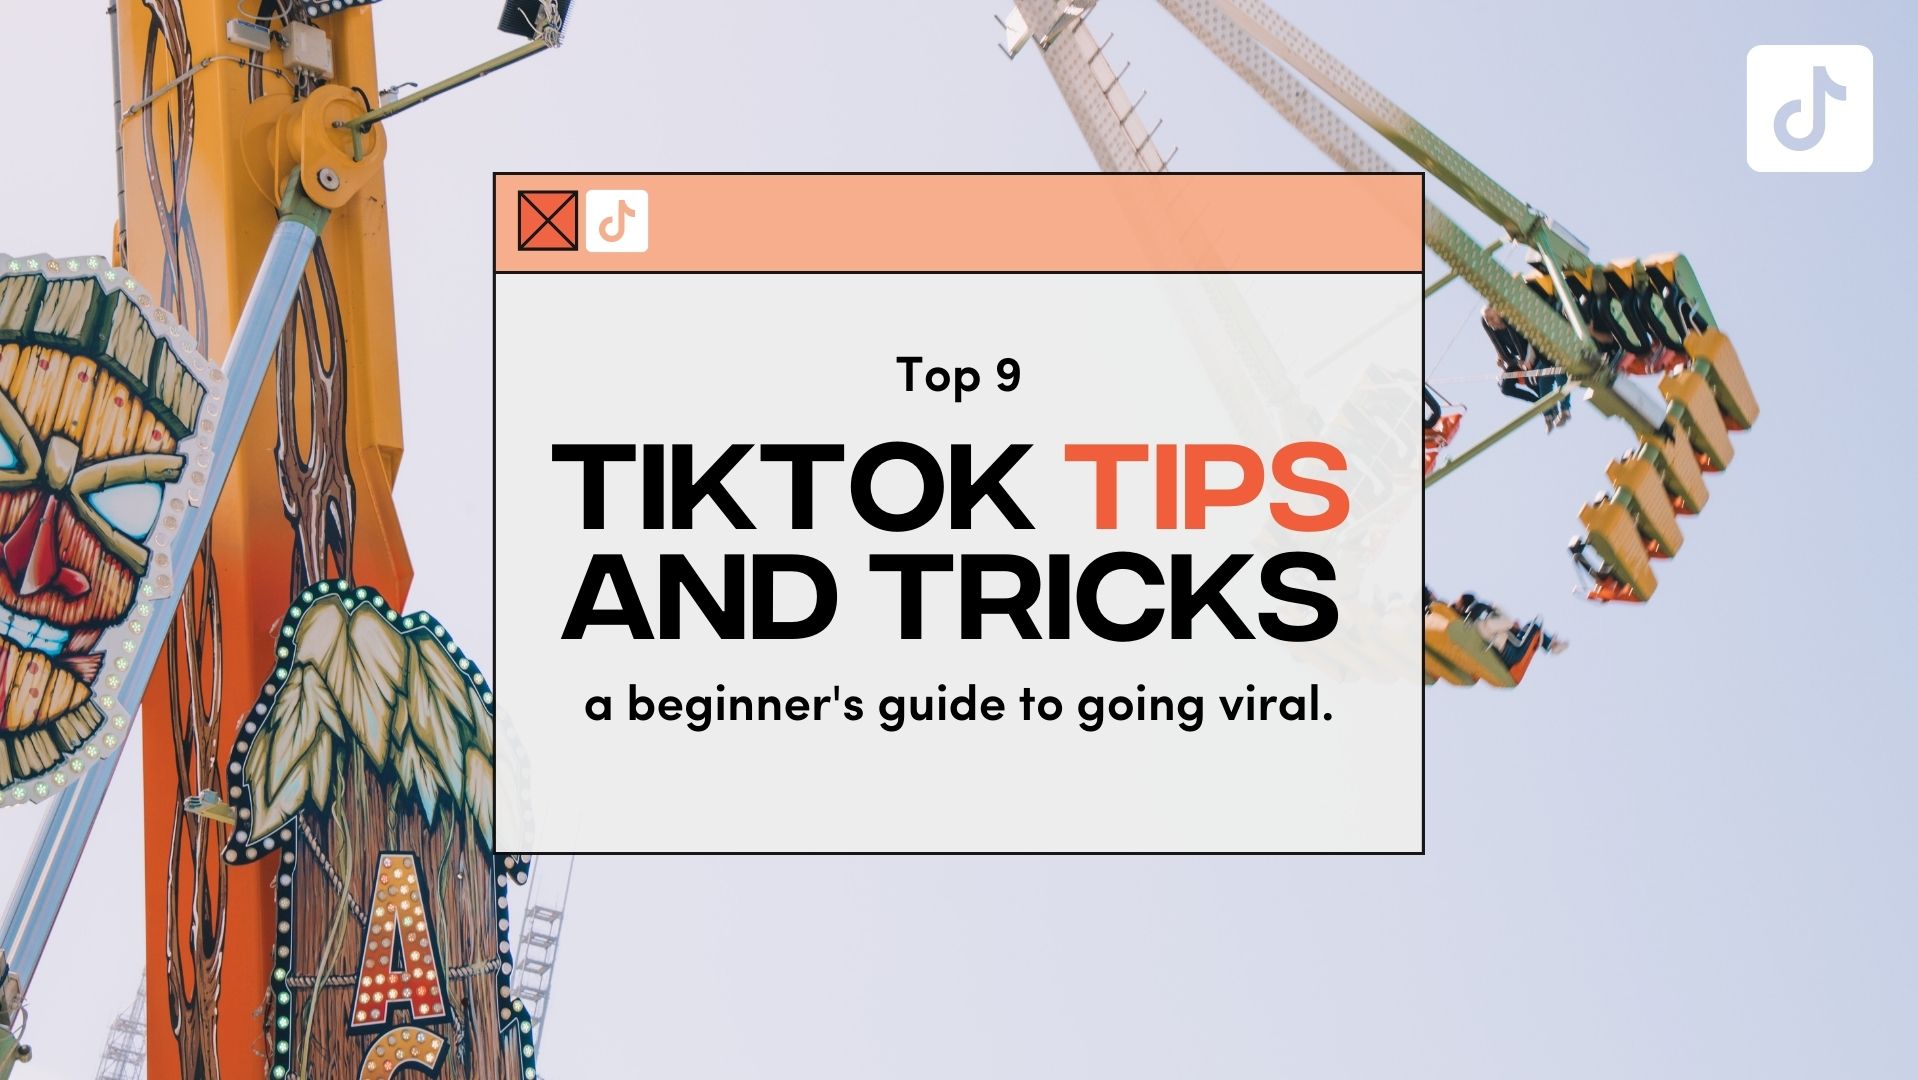 Top 5 TikTok Profile Picture Ideas